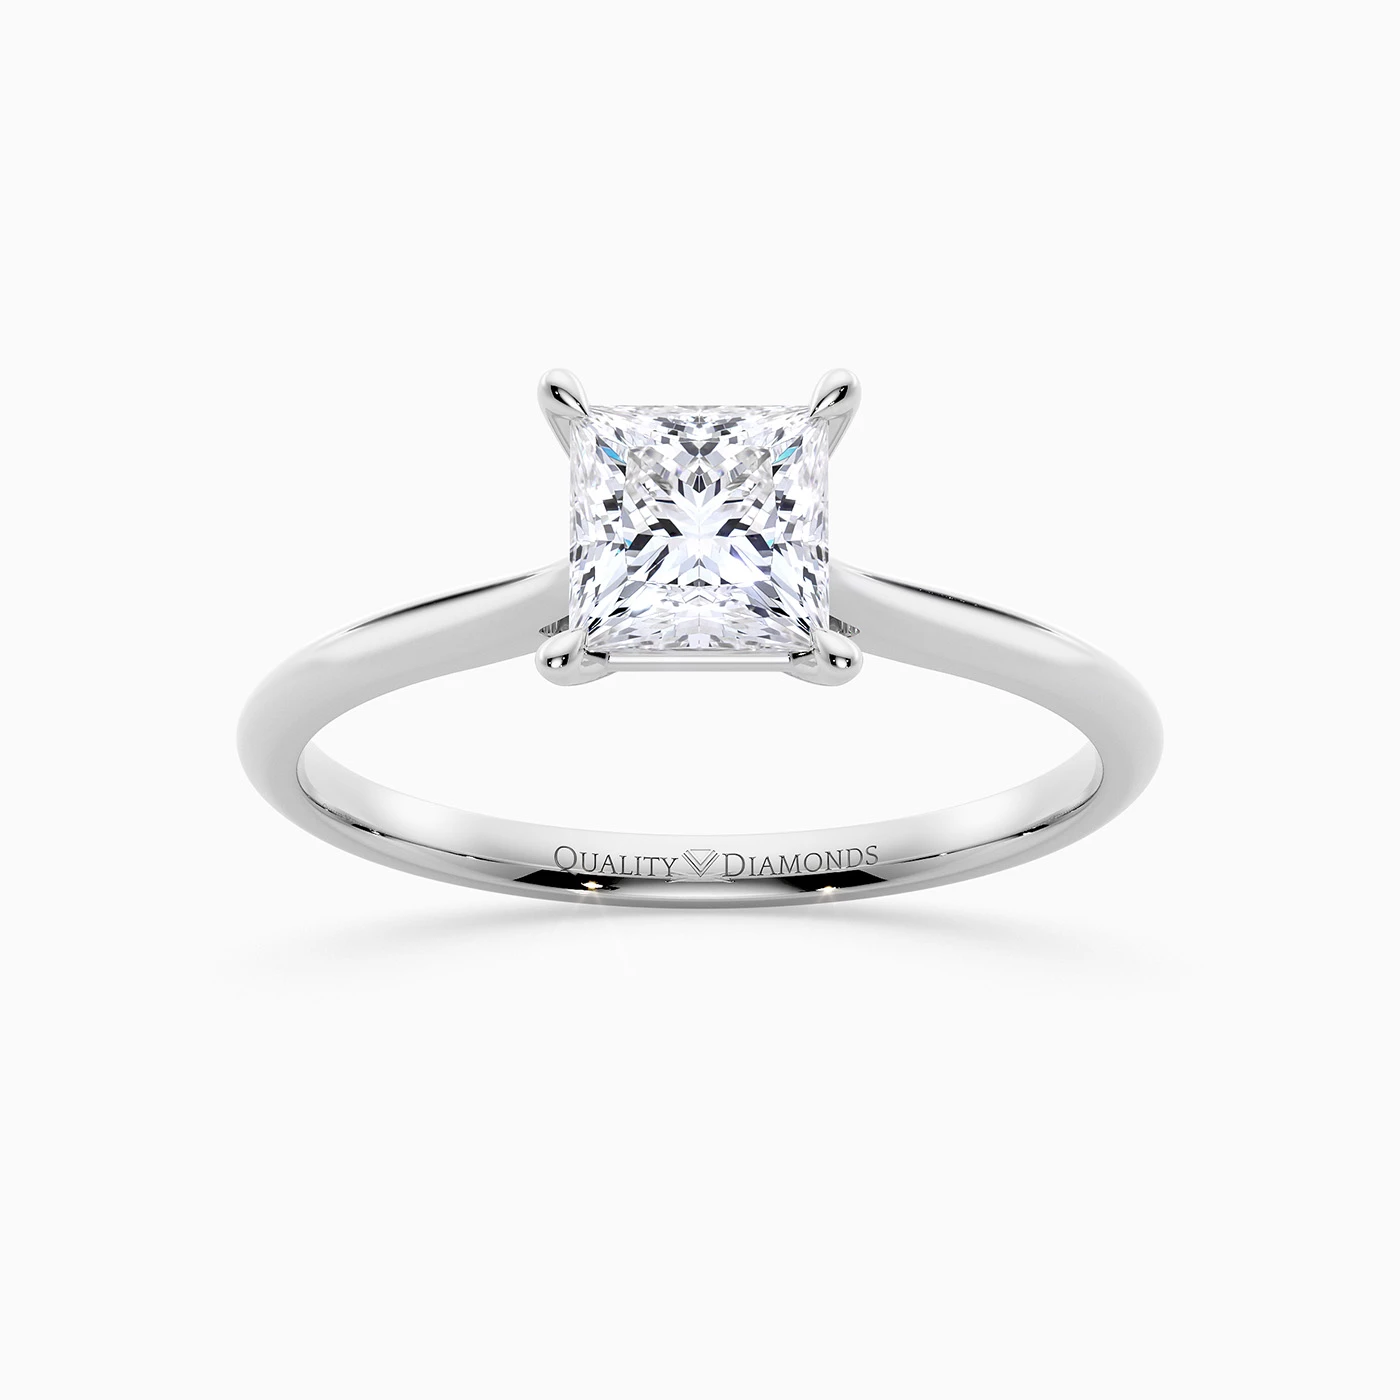 Princess Carys Diamond Ring in 18K White Gold